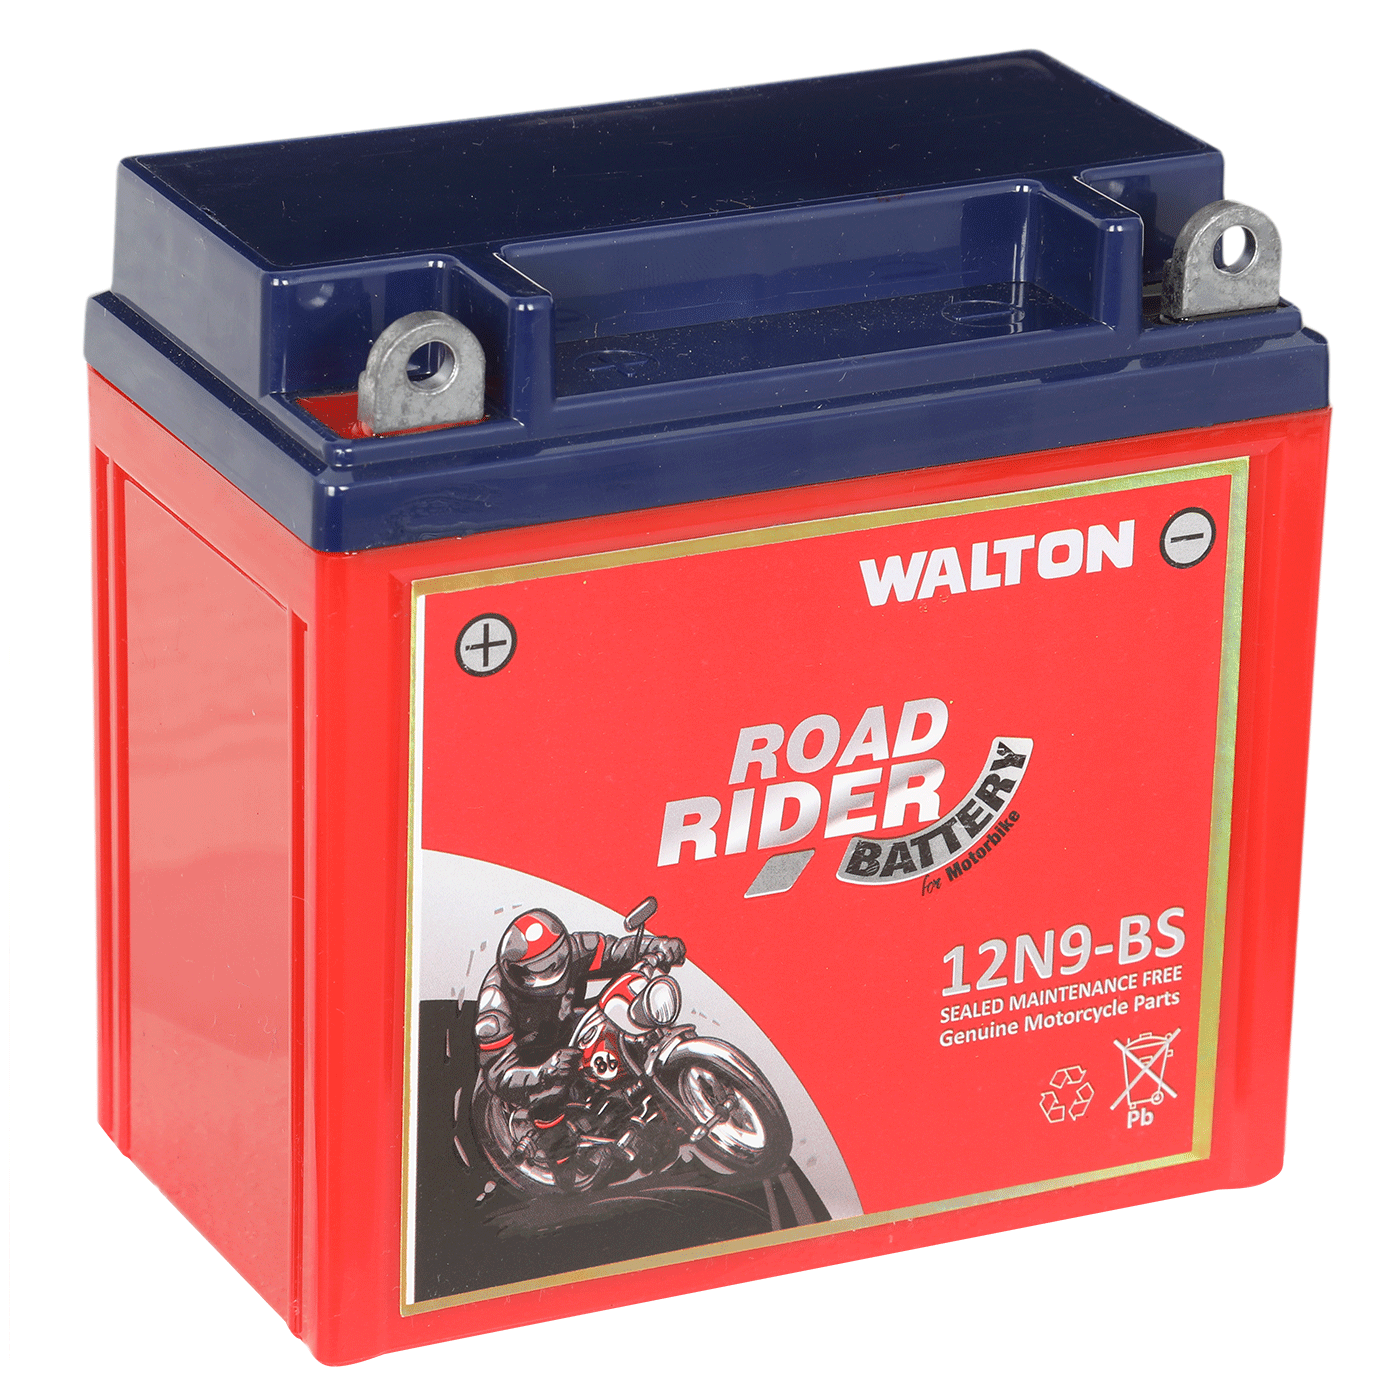 Road Rider12N9-BS price in Bangladesh